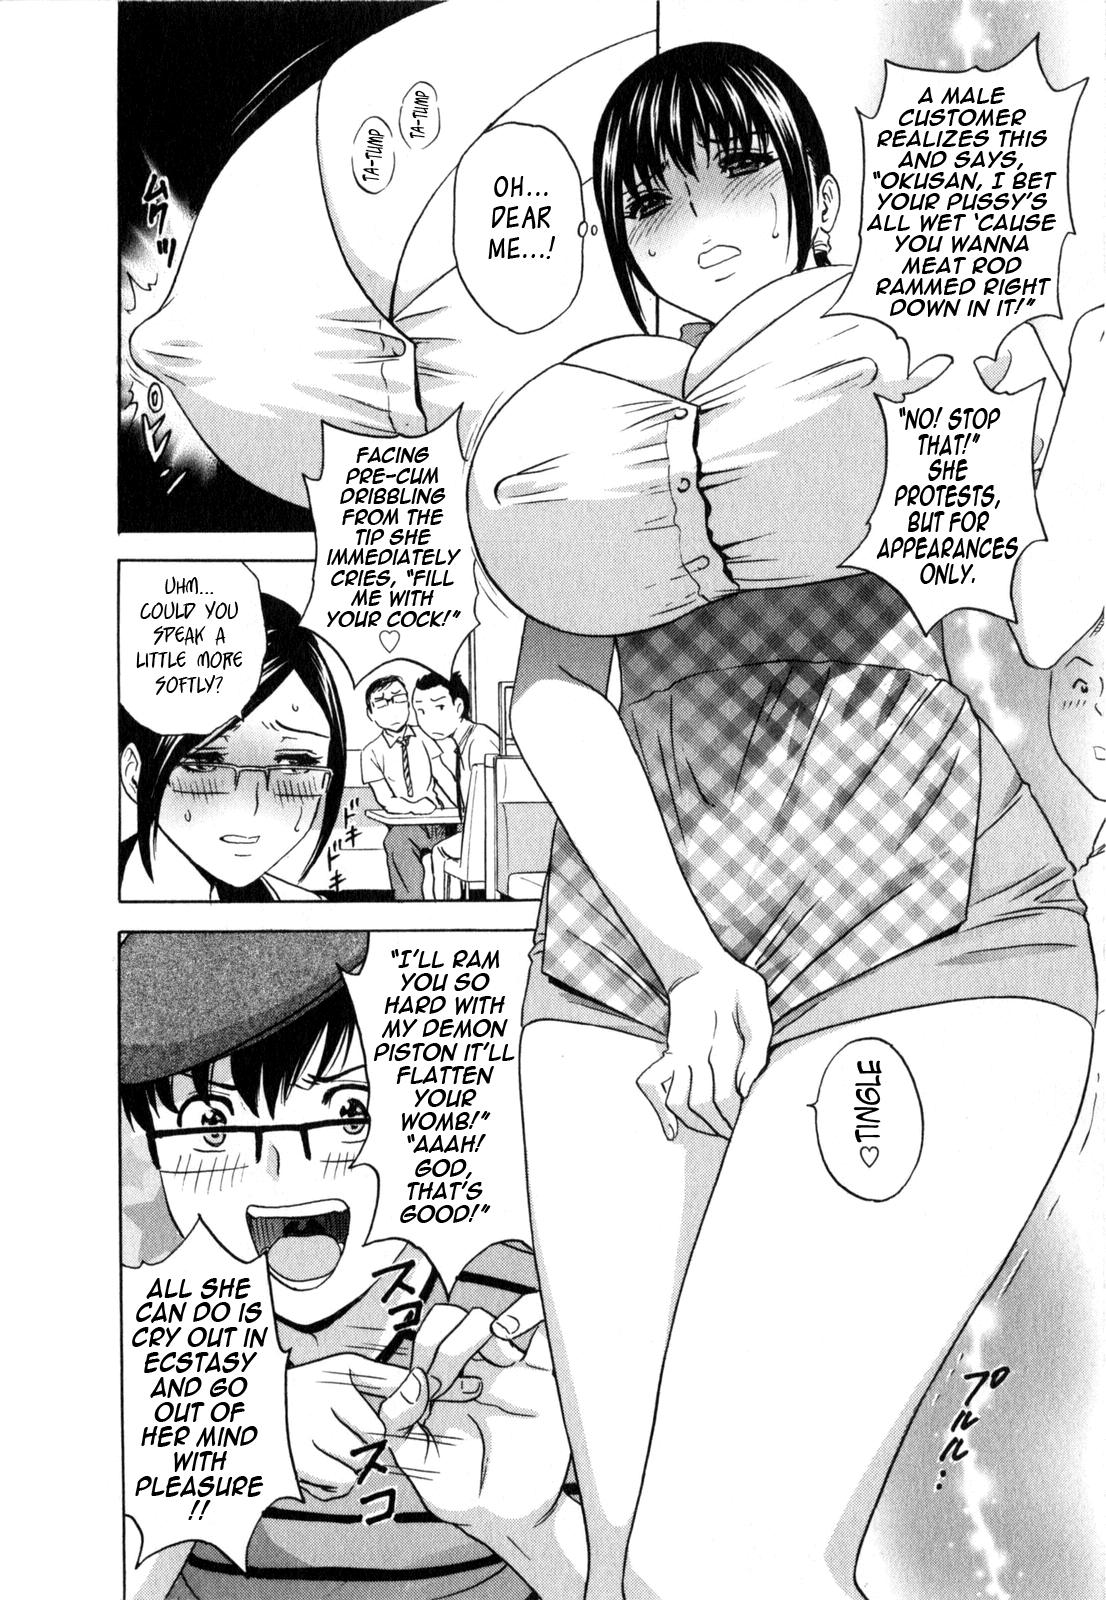 [Hidemaru] Life with Married Women Just Like a Manga 2 - Ch. 1-7 [English] {Tadanohito} 111